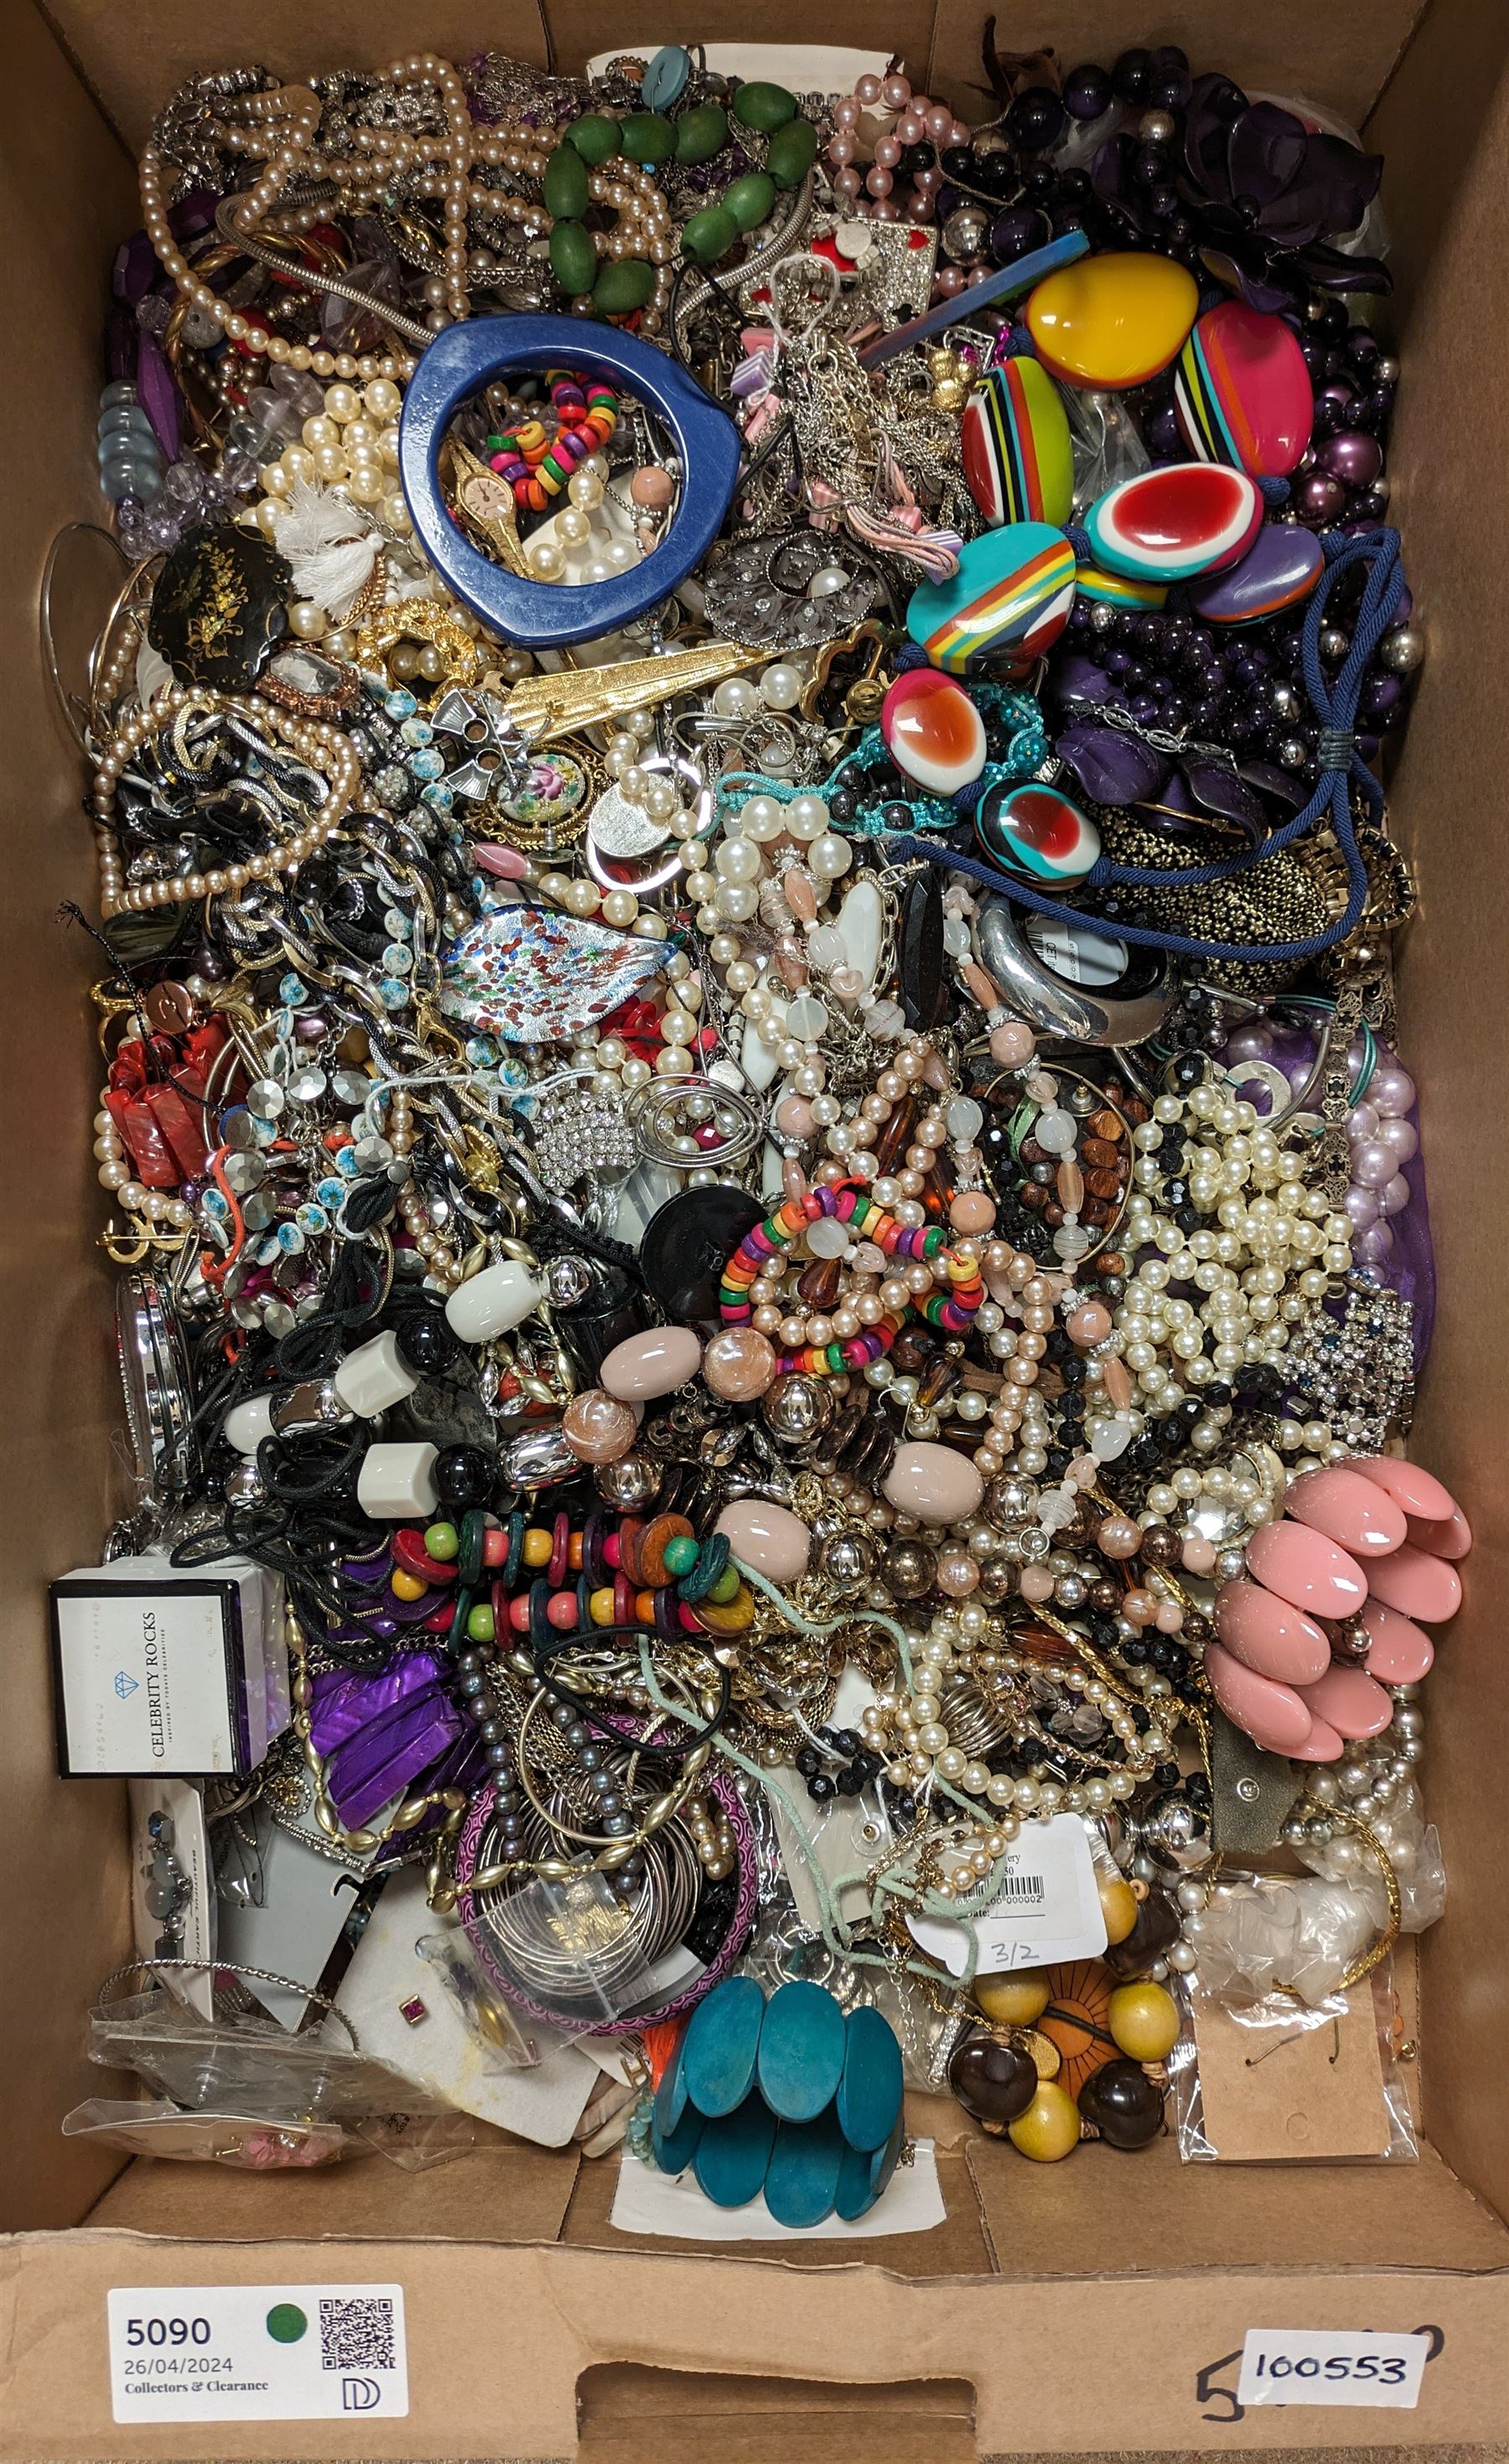 Large quantity of costume jewellery including bracelets